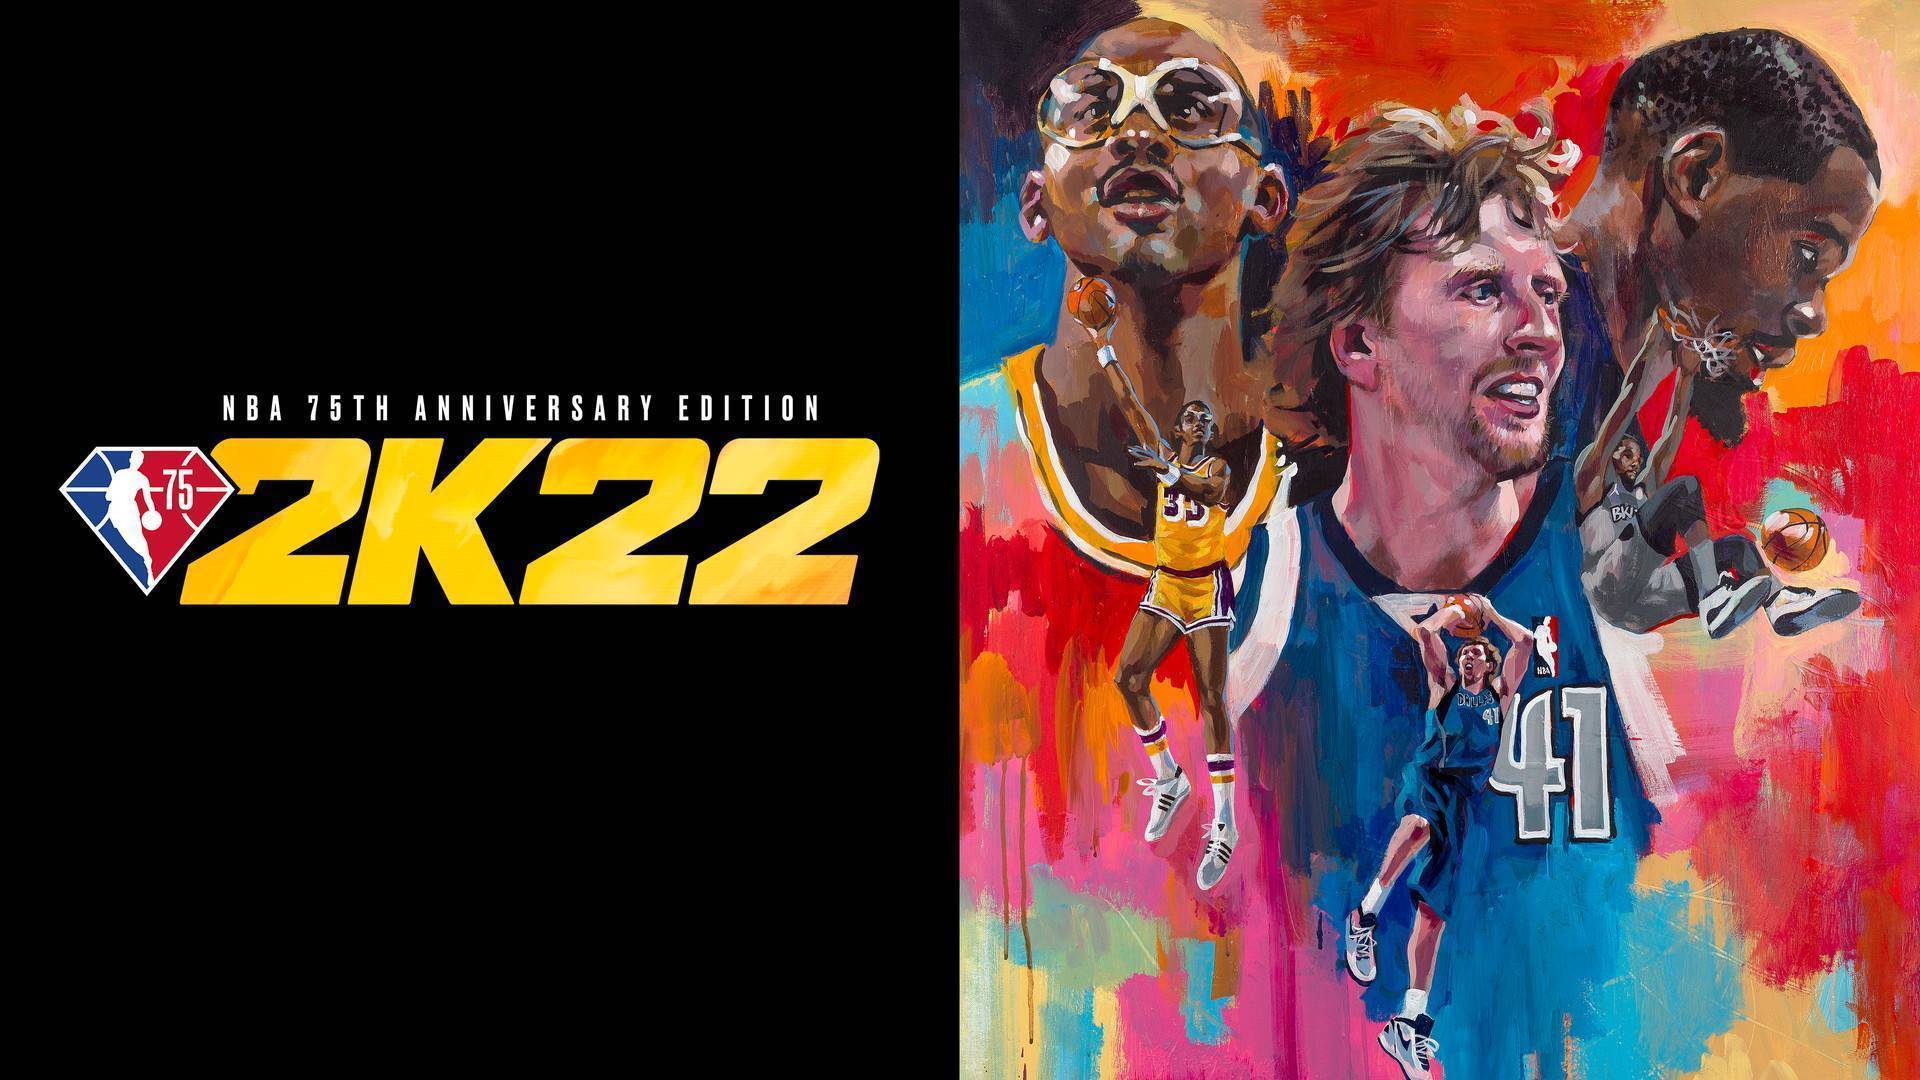 NBA 2K22 (XBOX ONE) cheap - Price of $6.78